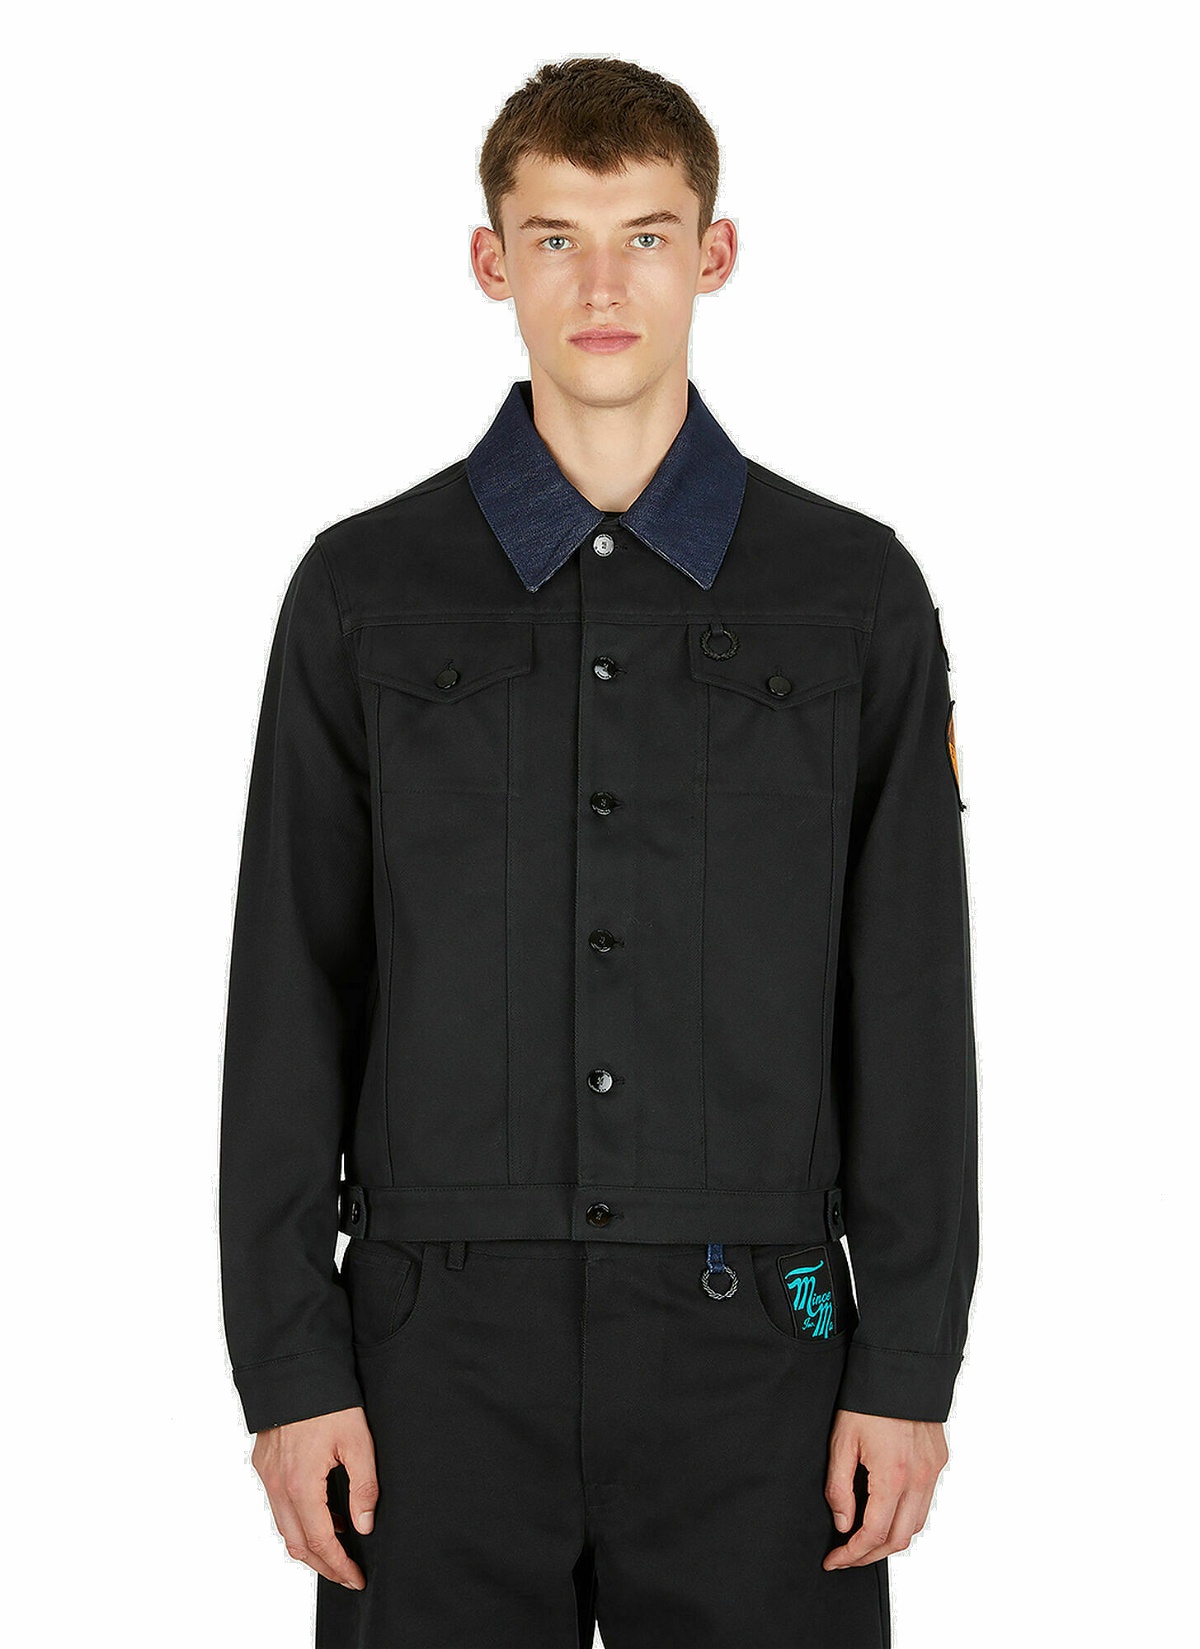 Photo: Brushed Denim Jacket in Black